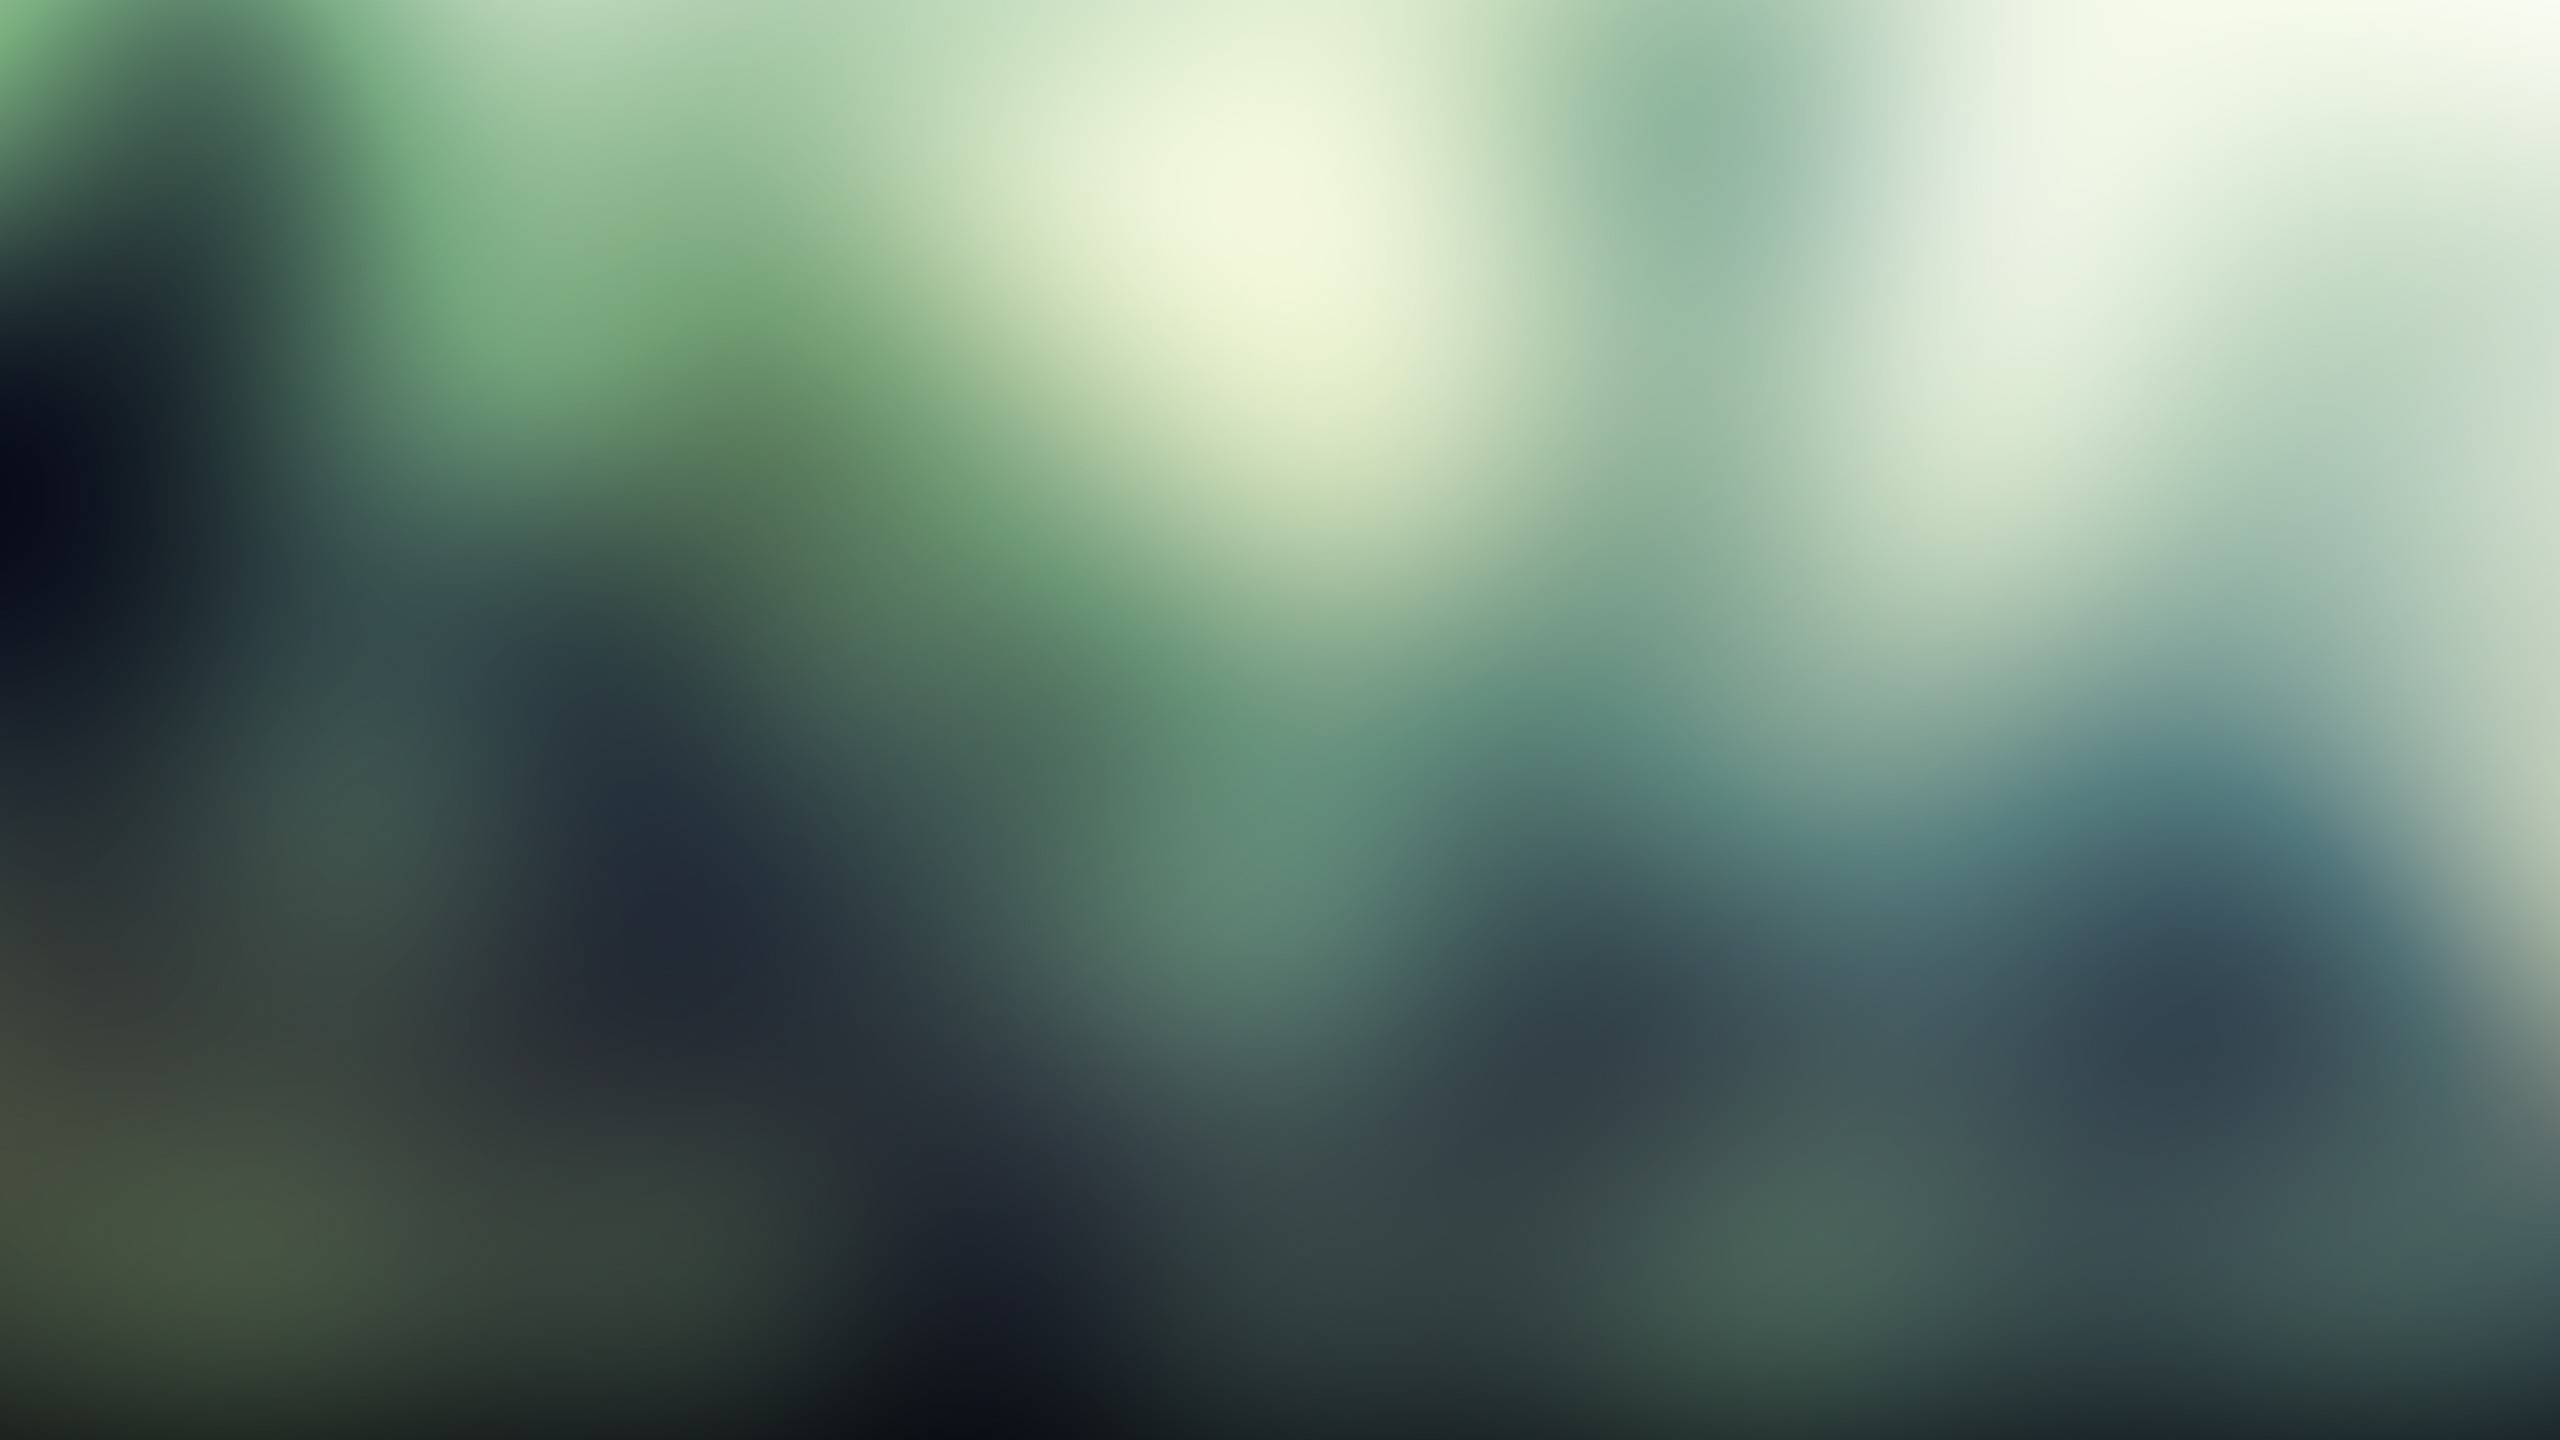 Windows 10 Blurry Wallpaper - WallpaperSafari